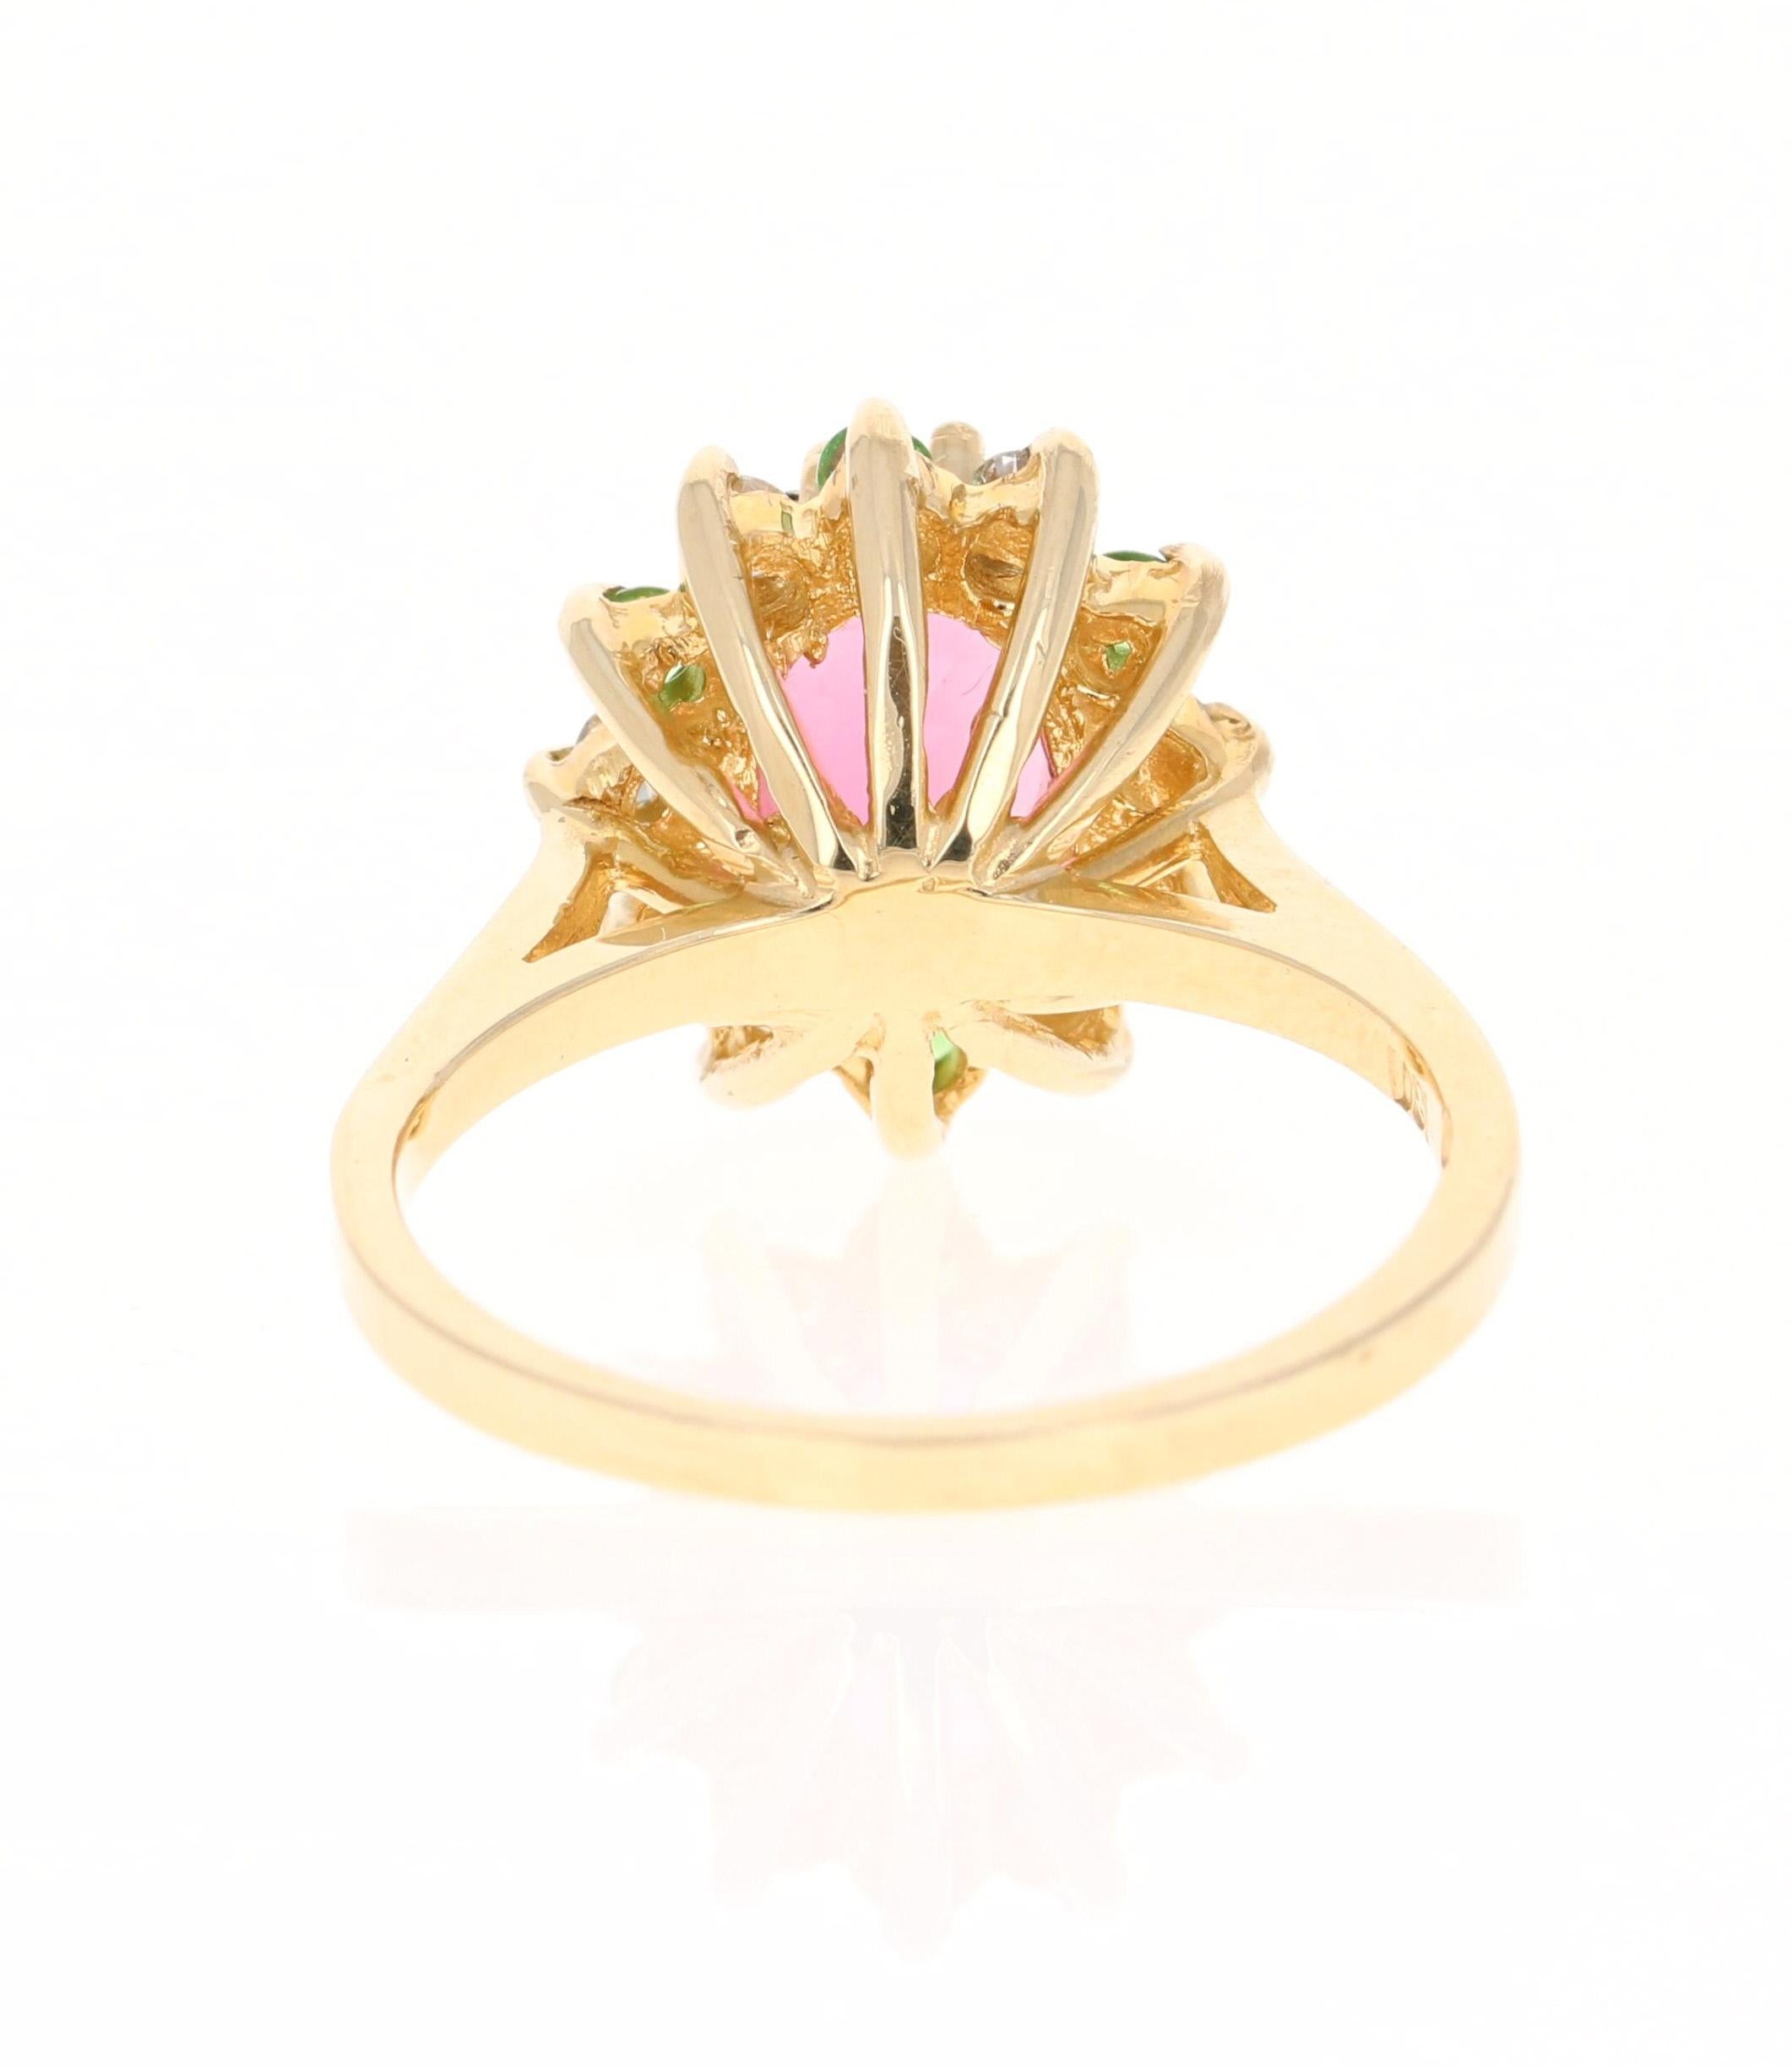 Oval Cut 1.97 Carat Pink Tourmaline Tsavorite Diamond Yellow Gold Ring For Sale